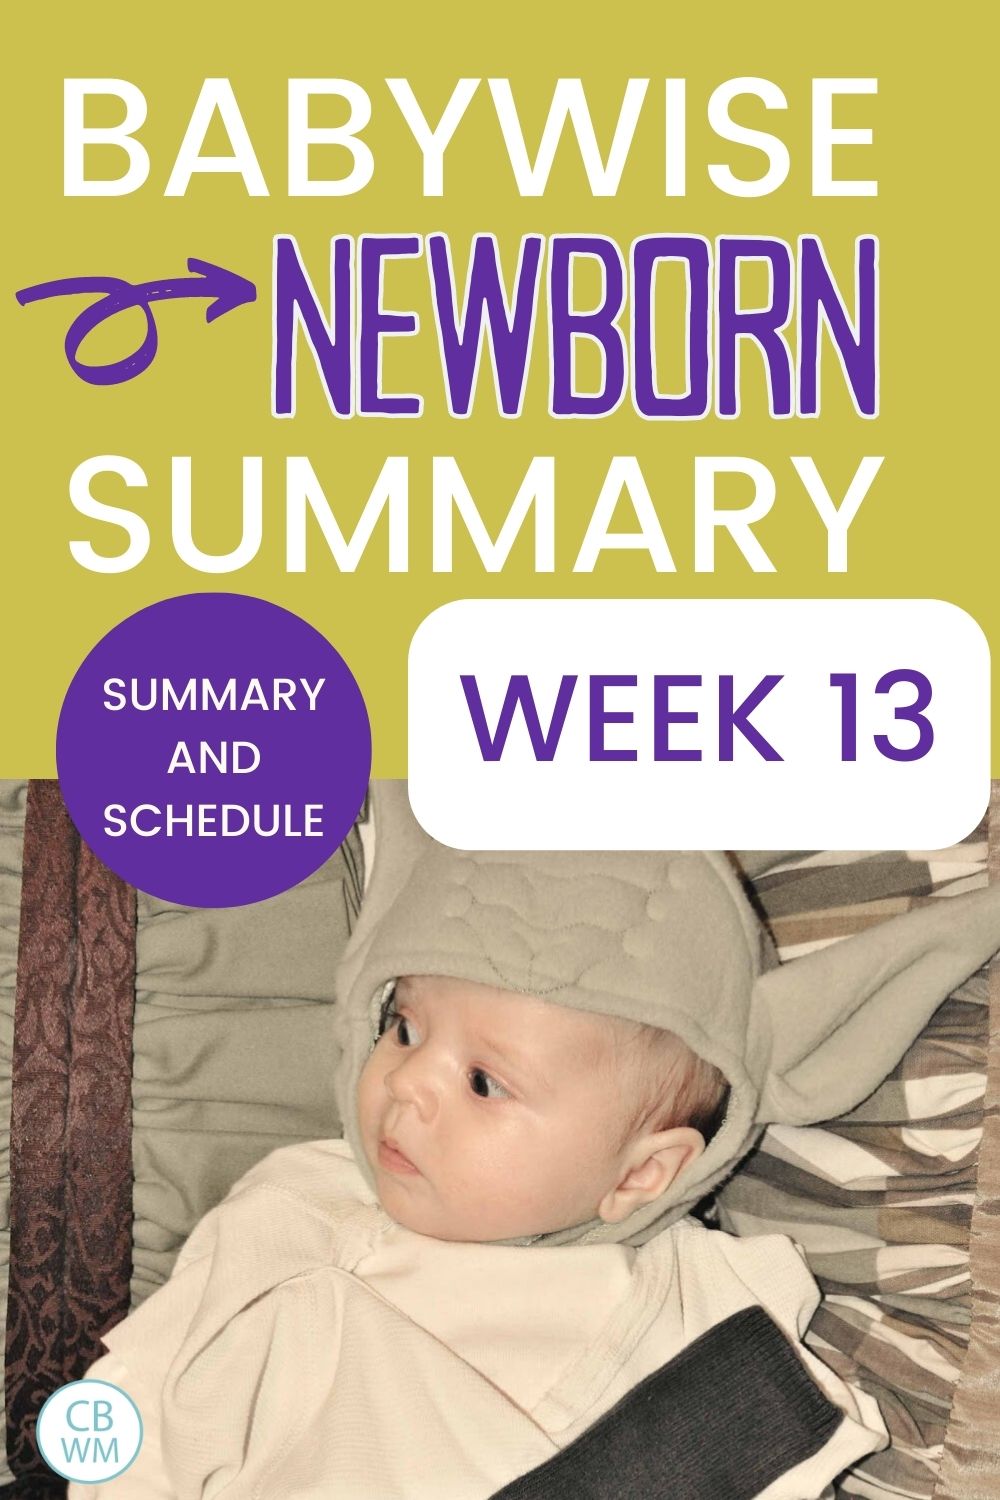 Brinley newborn summary week 13 pinnable image